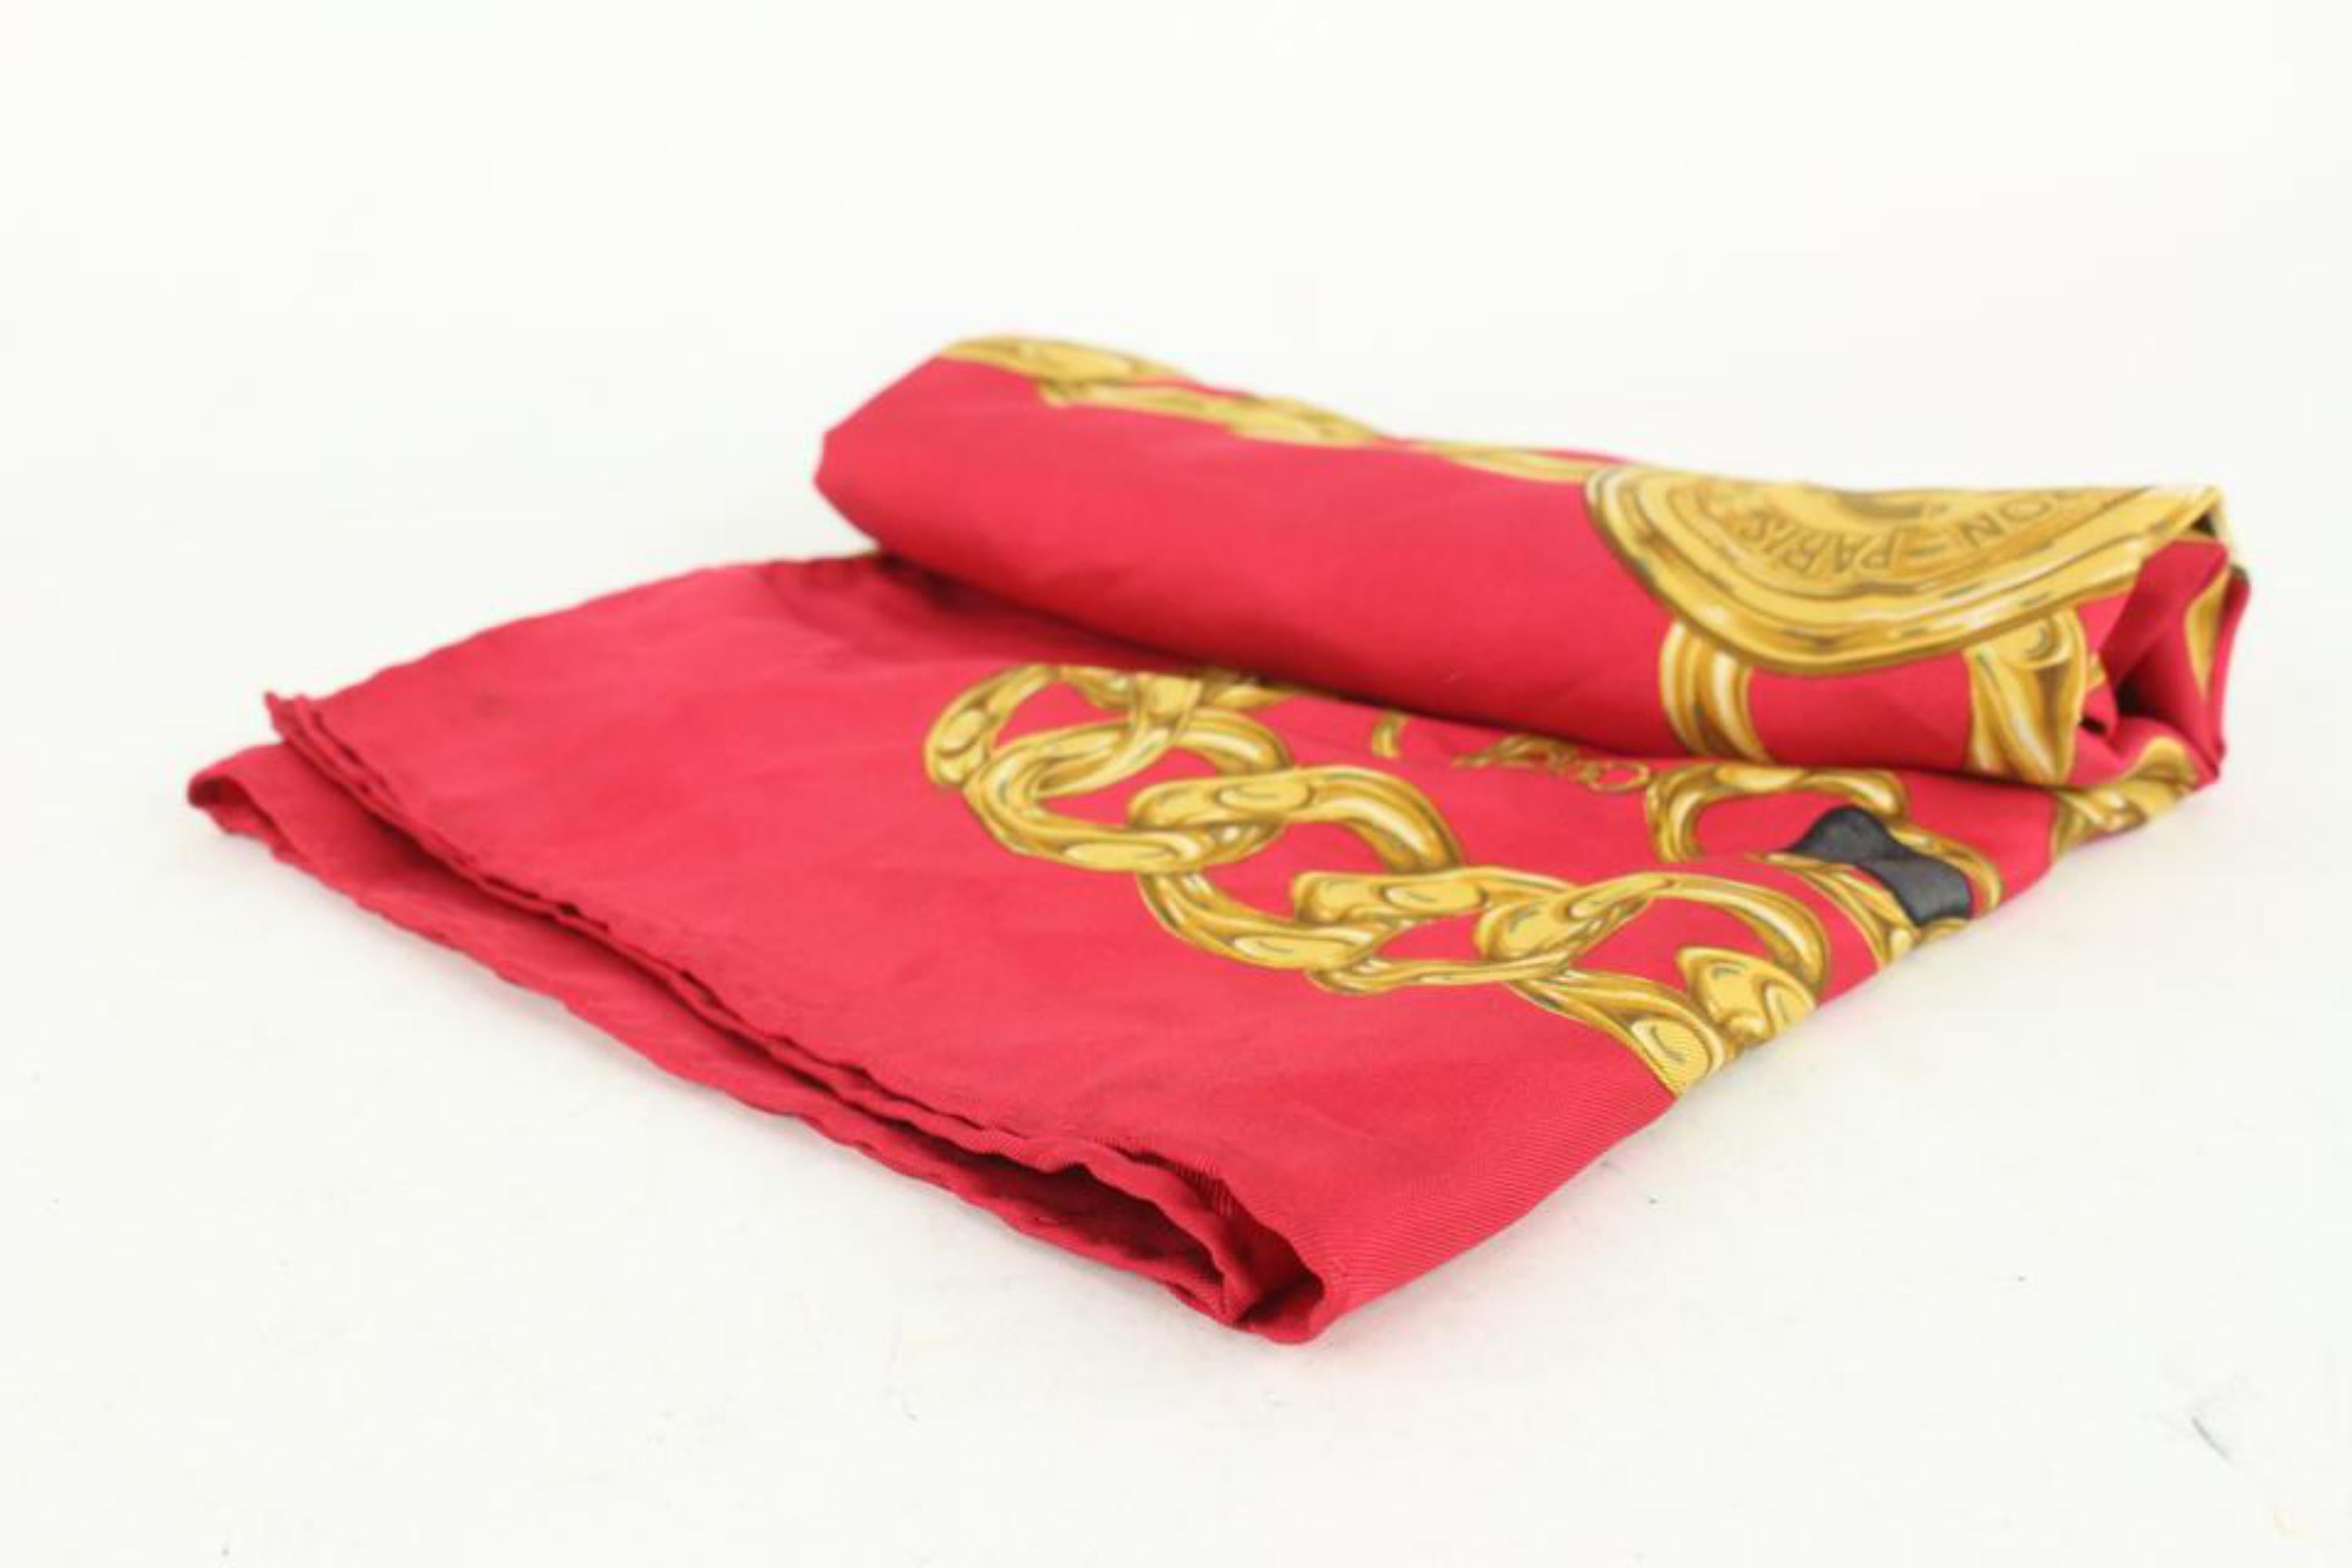 Chanel Red x Black x Gold Chain CC Belt Silk Scarf 112c29
Measurements: Length:  34